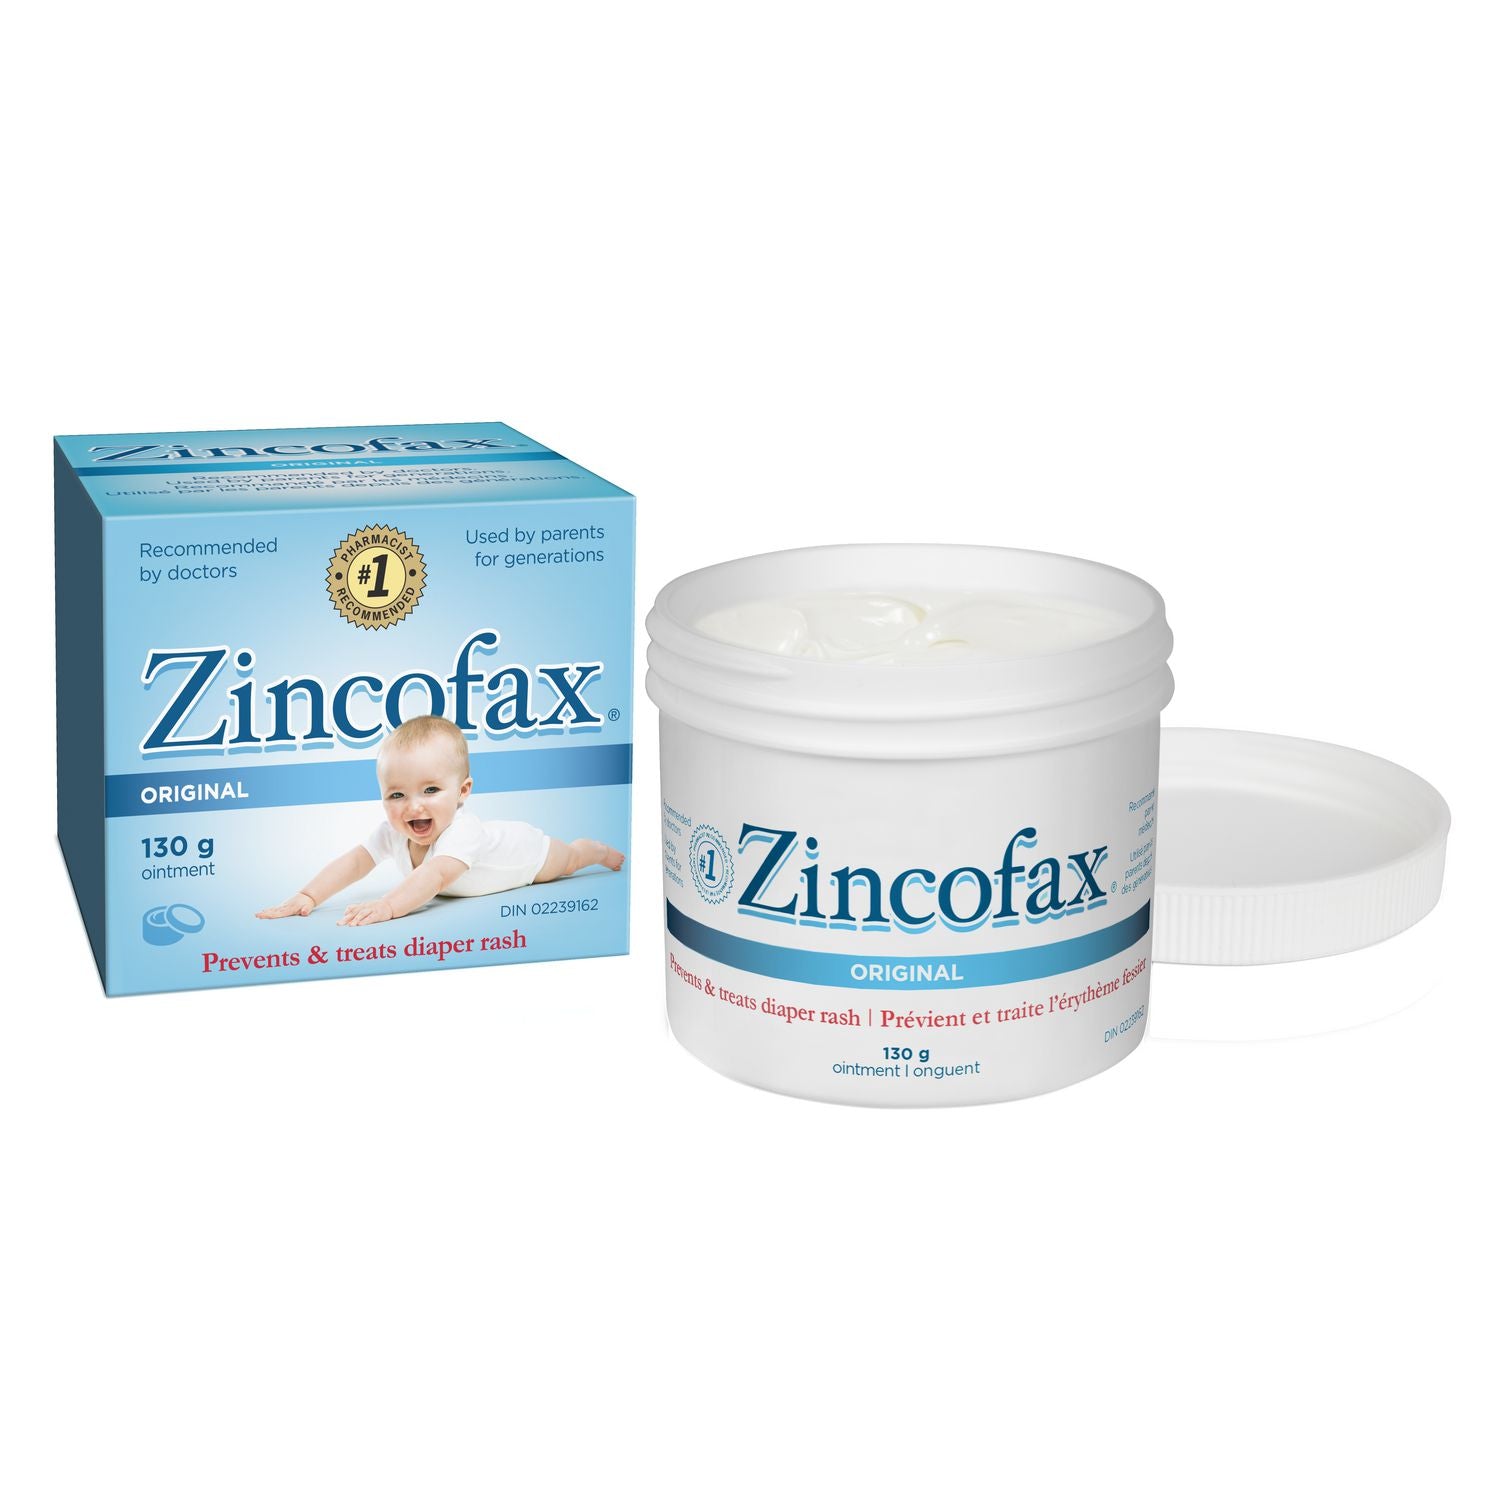 Zincofax Original Ointment